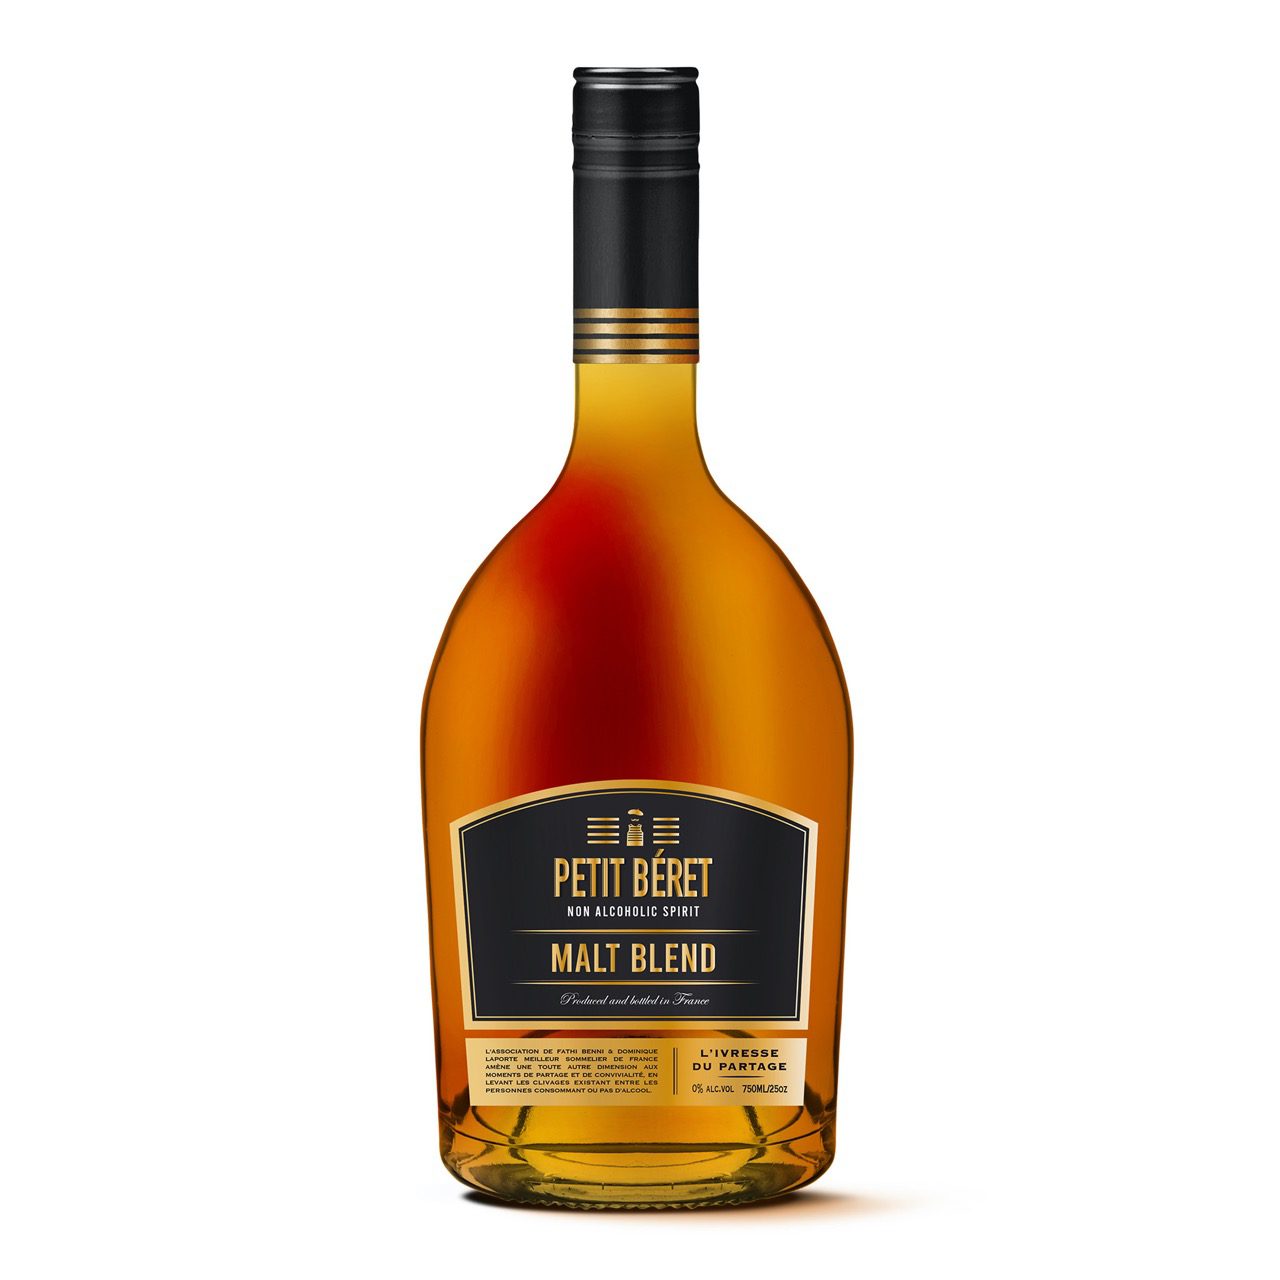 Whisky sans alcool - SoberWhisky 0.0 % - 50cl - Whisky/Français - Les Vins  Brunin-Guillier